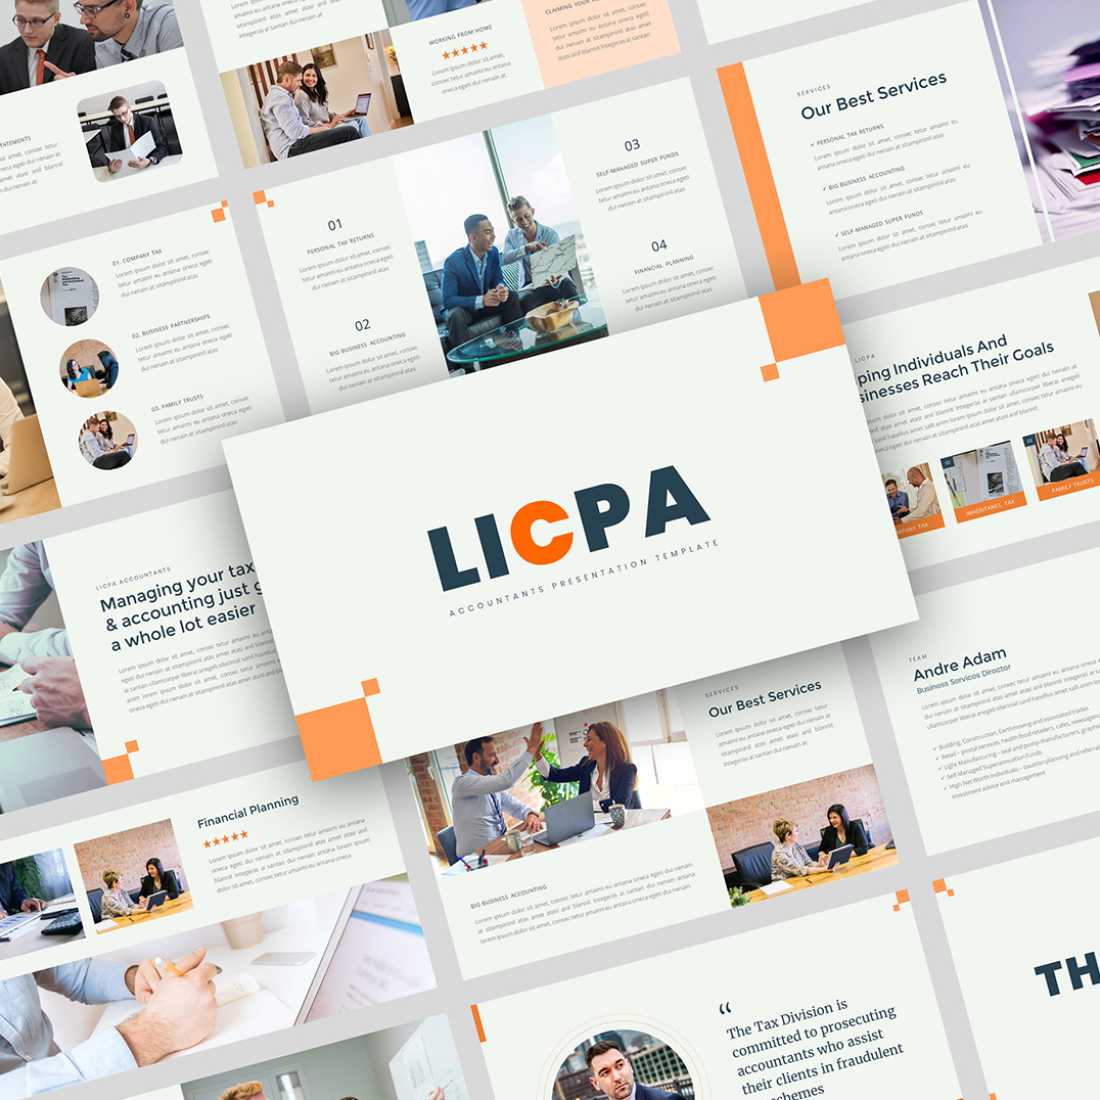 Licpa - Accountants Presentation Google Slides Template preview image.